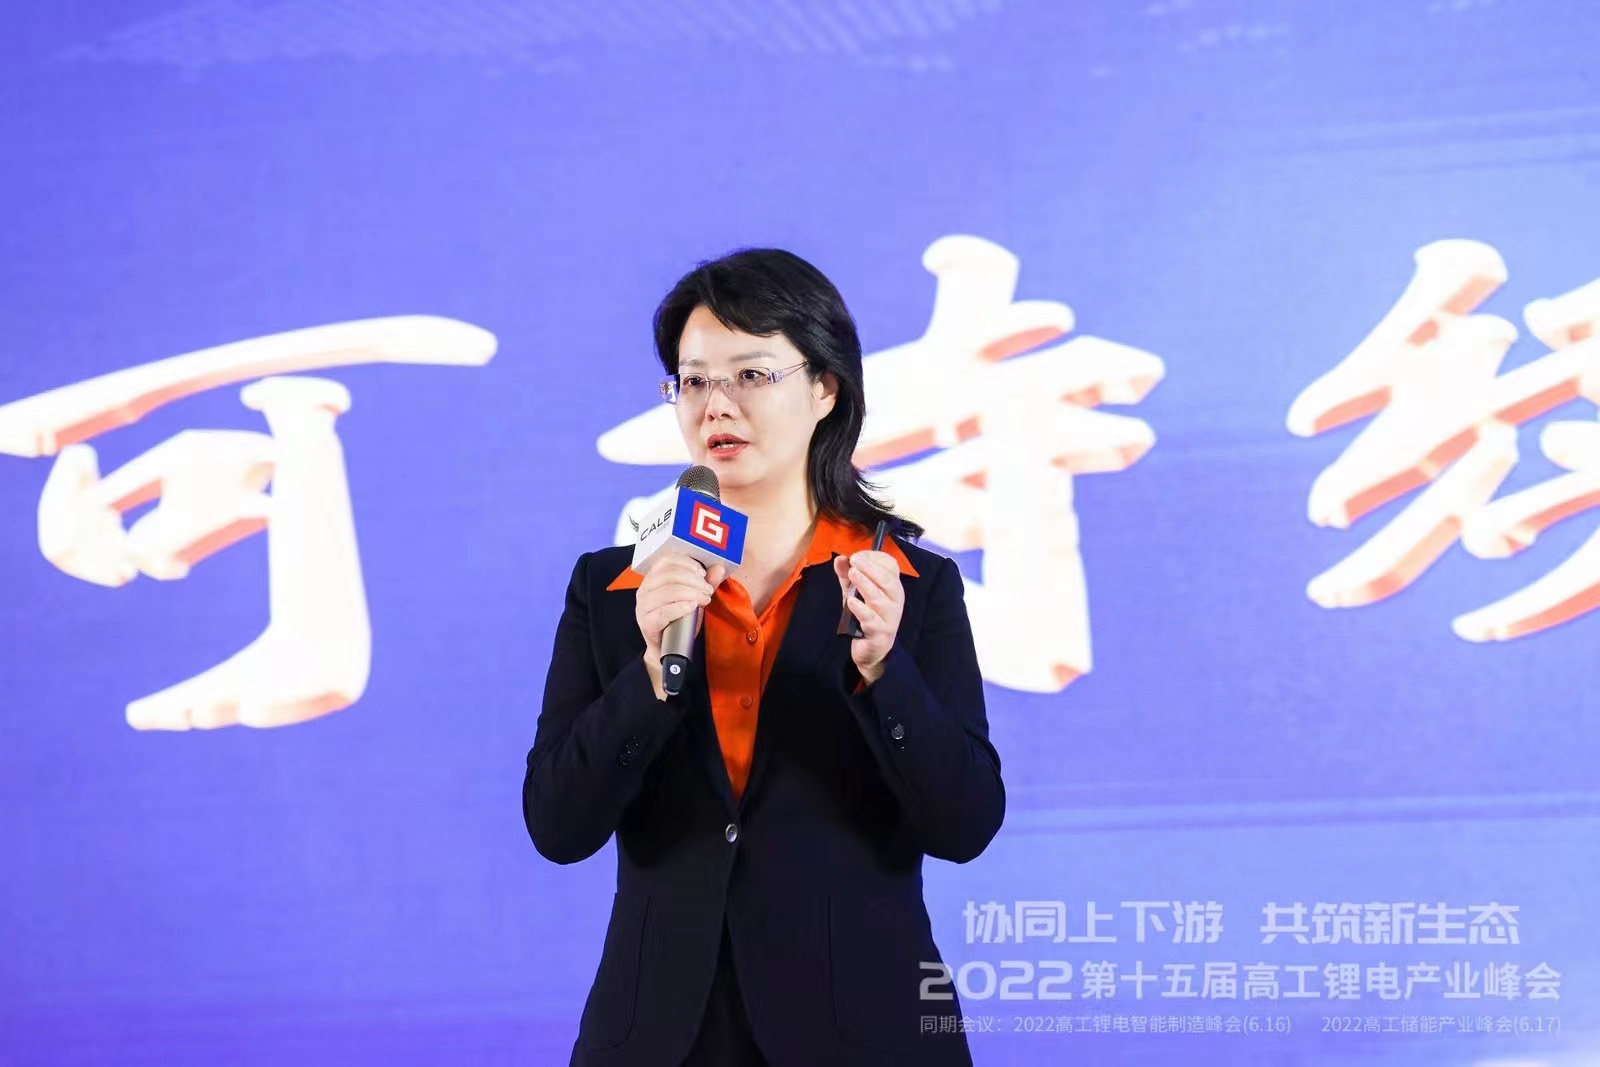 Chairman Liu Jingyu: Sustainable Development | Keynote speech at the 15th Gaogong Lithium Industry Summit